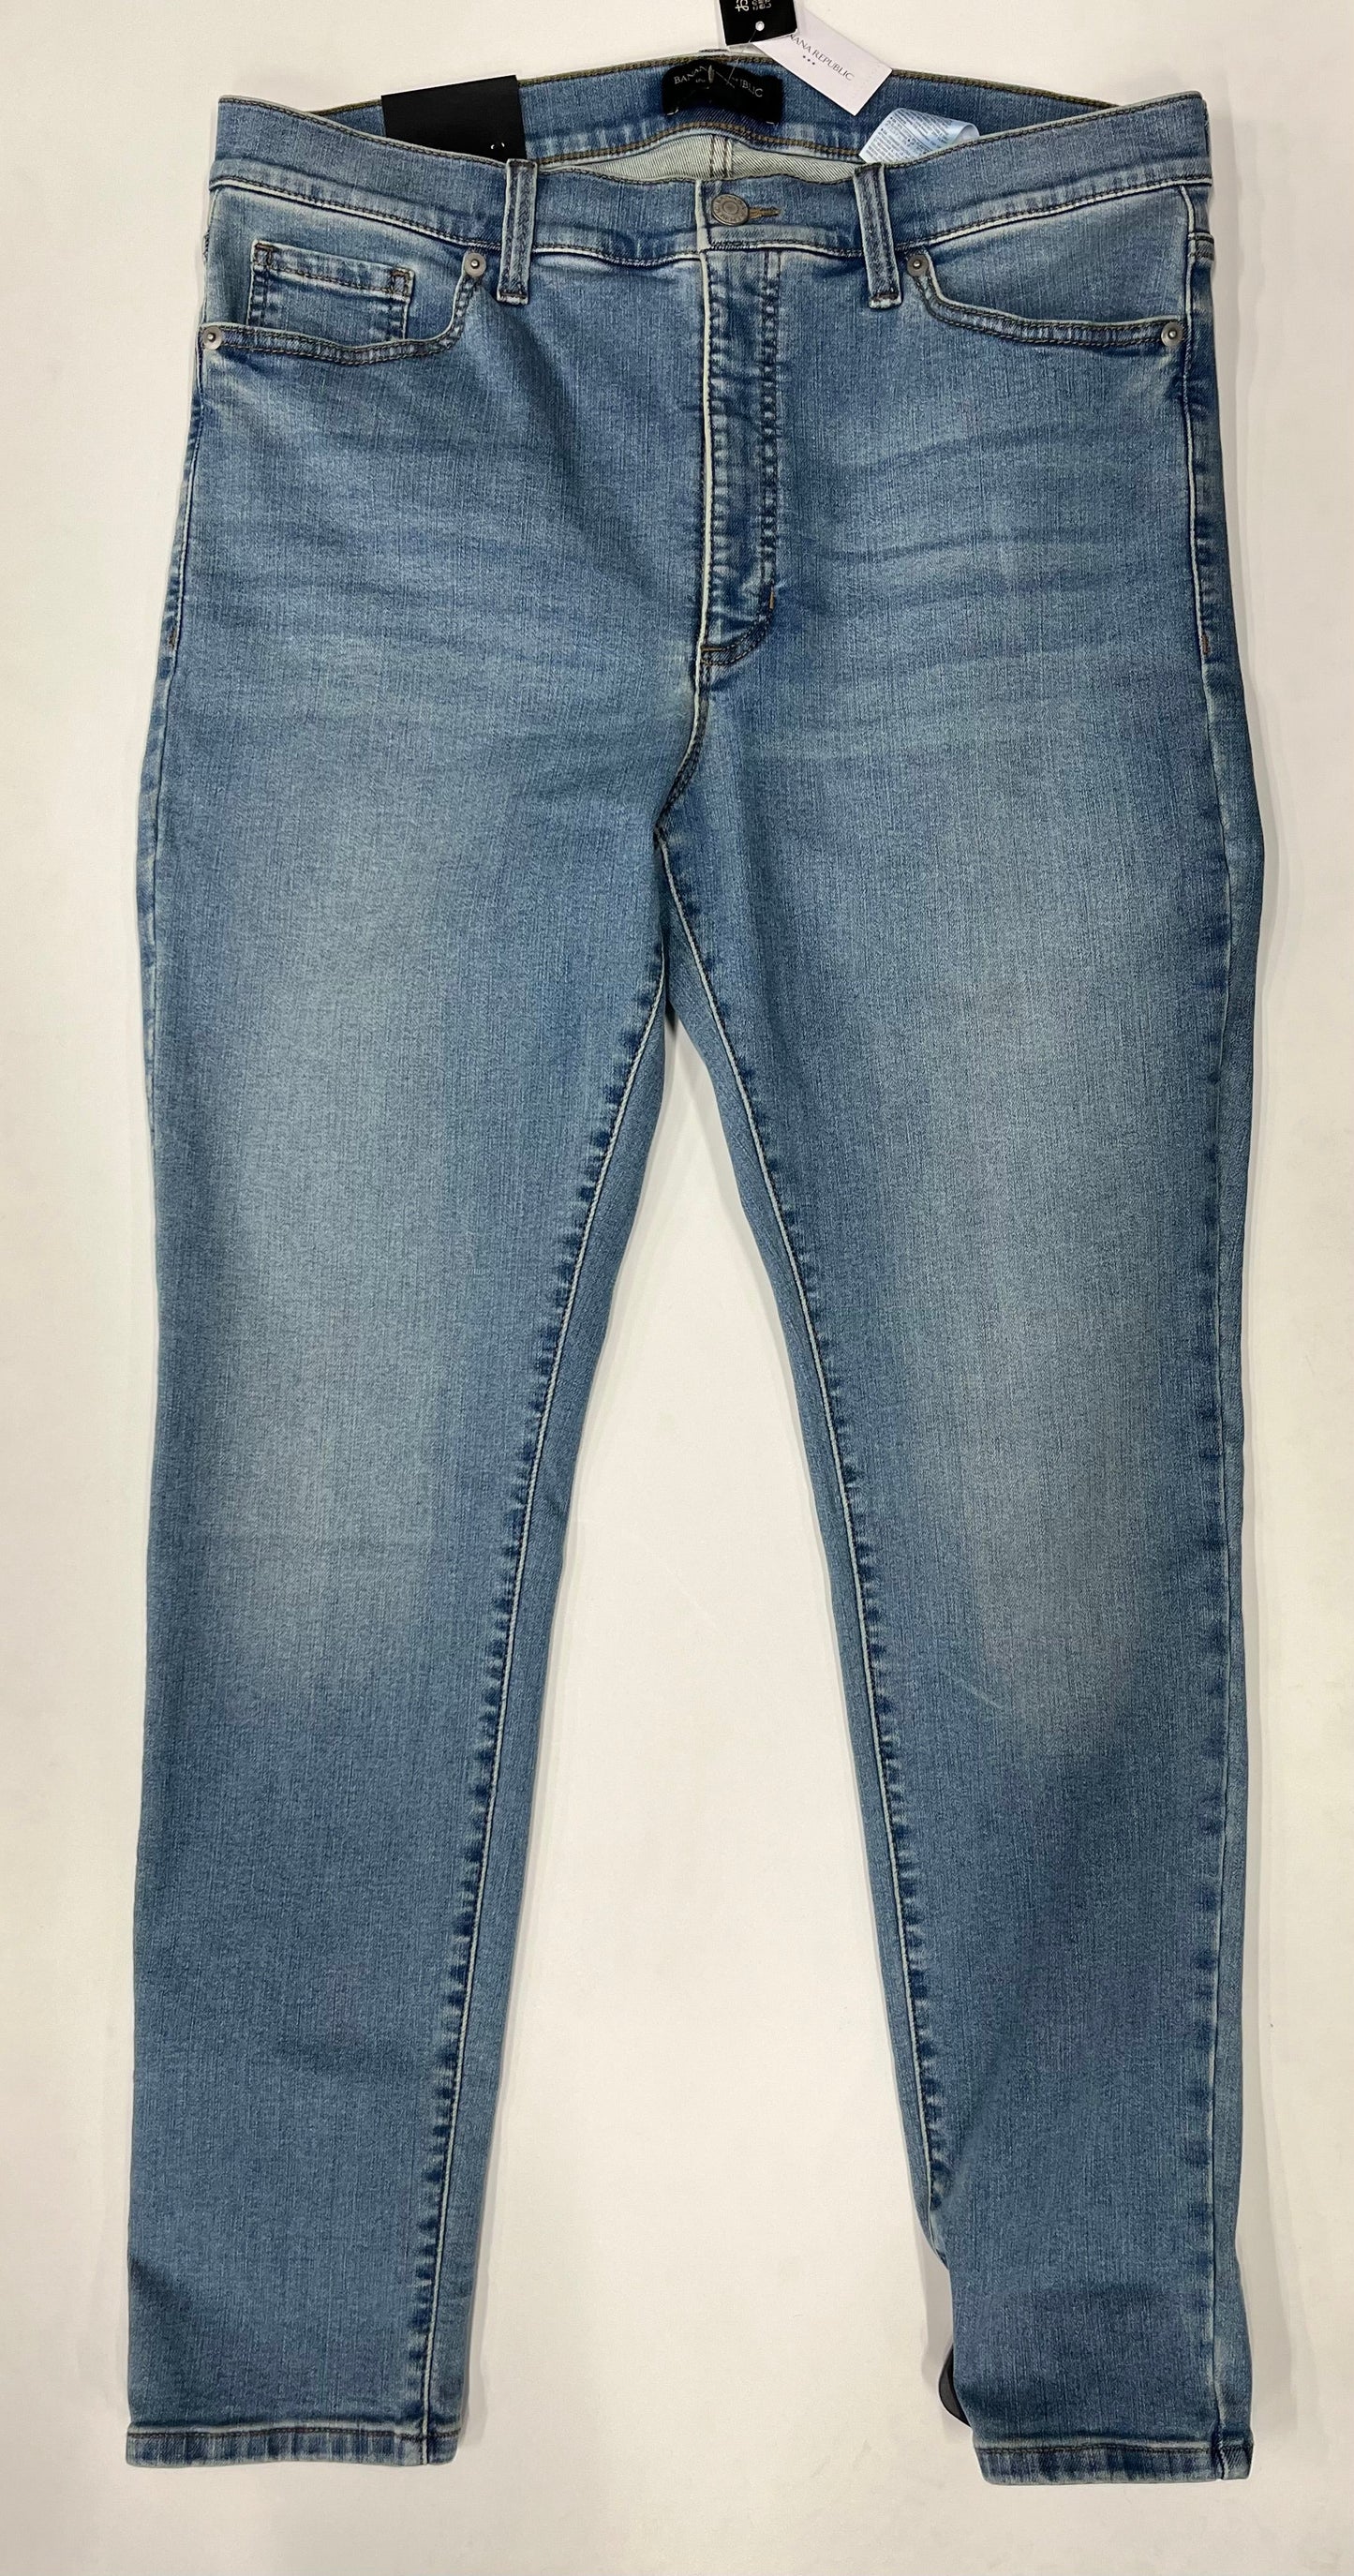 Jeans Skinny By Banana Republic NWT  Size: 4